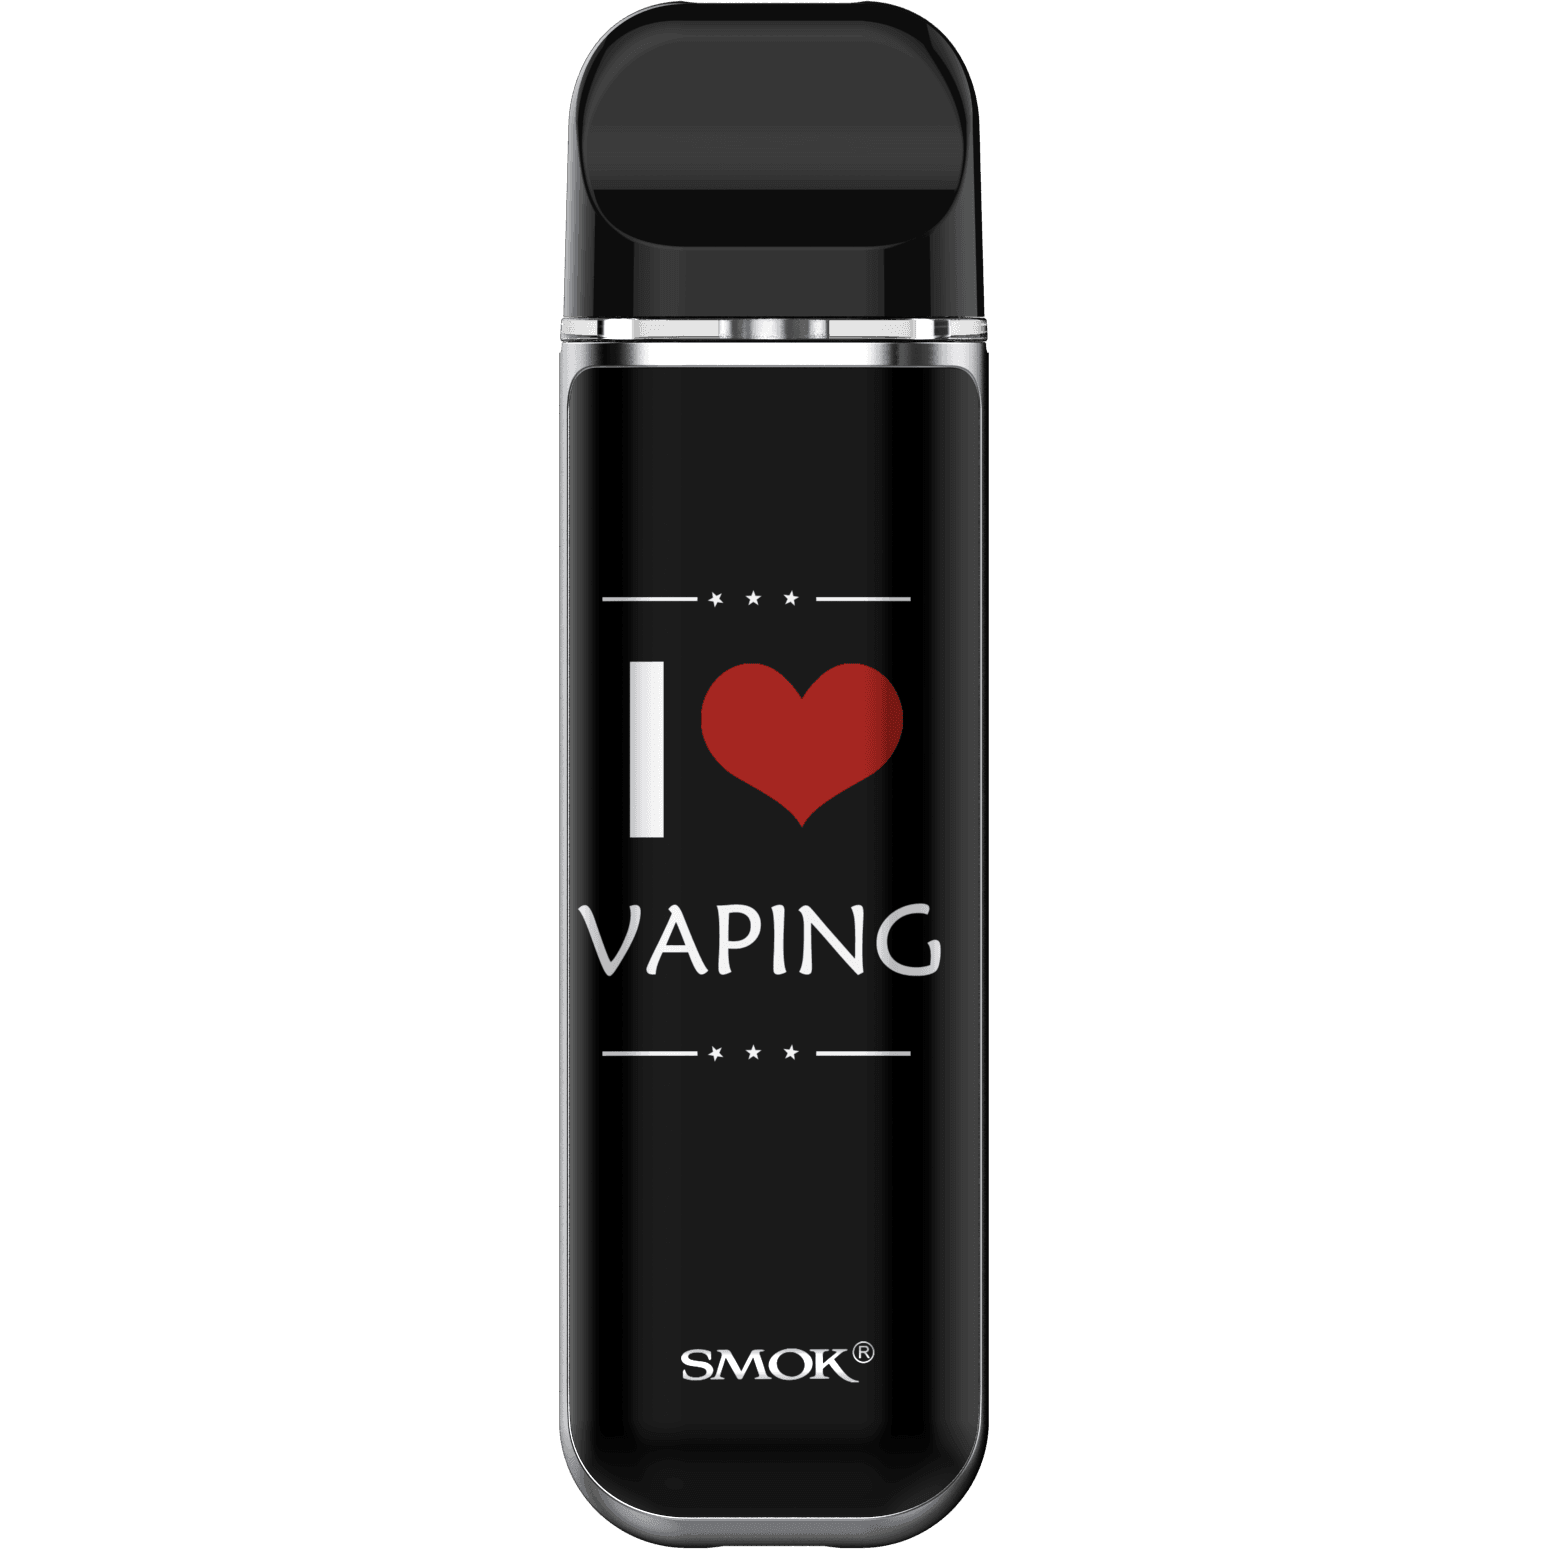 SMOK NOVO 2 POD I LOVE VAPING - Vape Unit